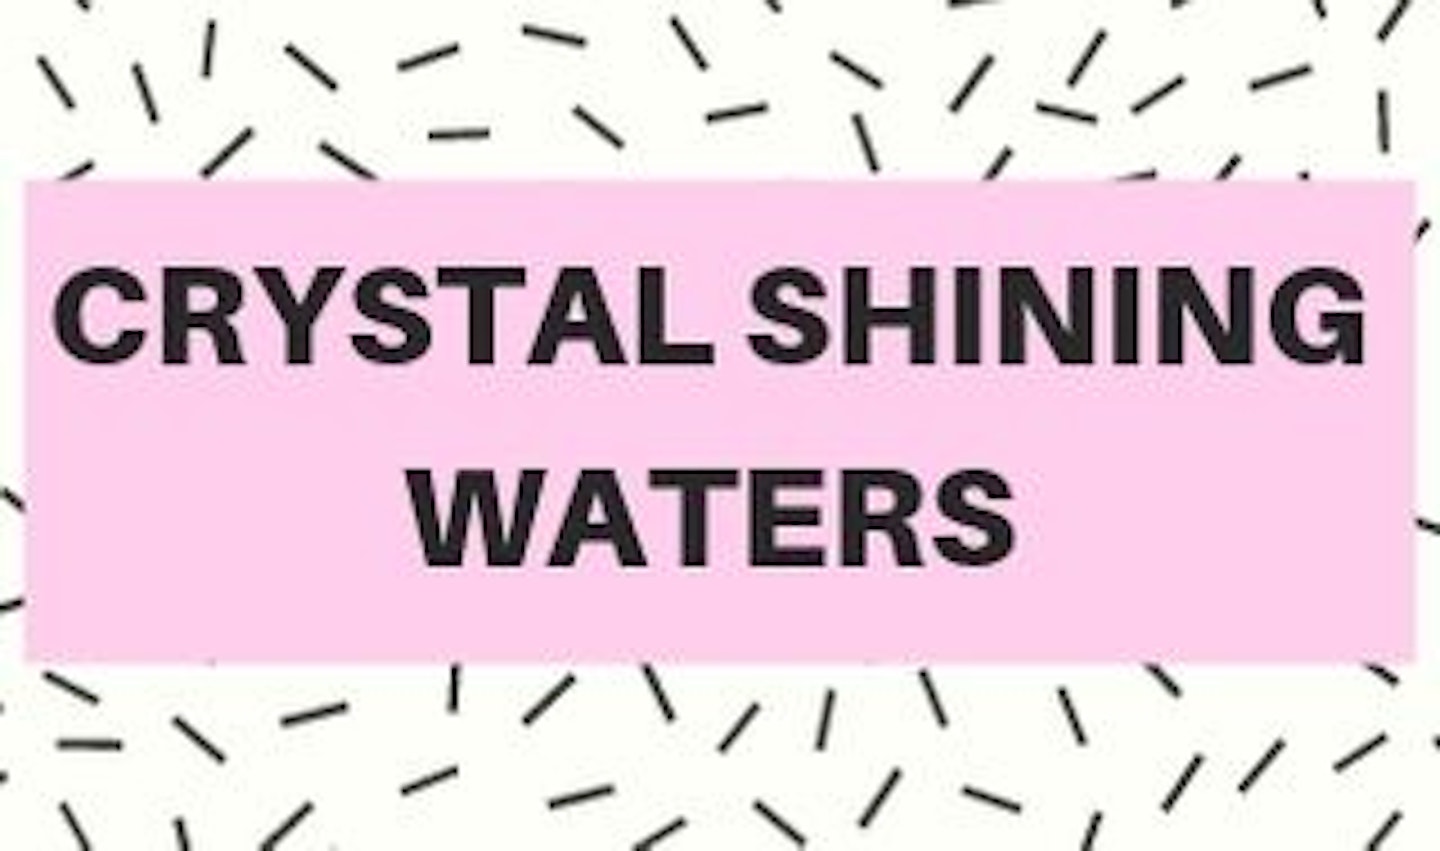 18) Crystal Shining Waters